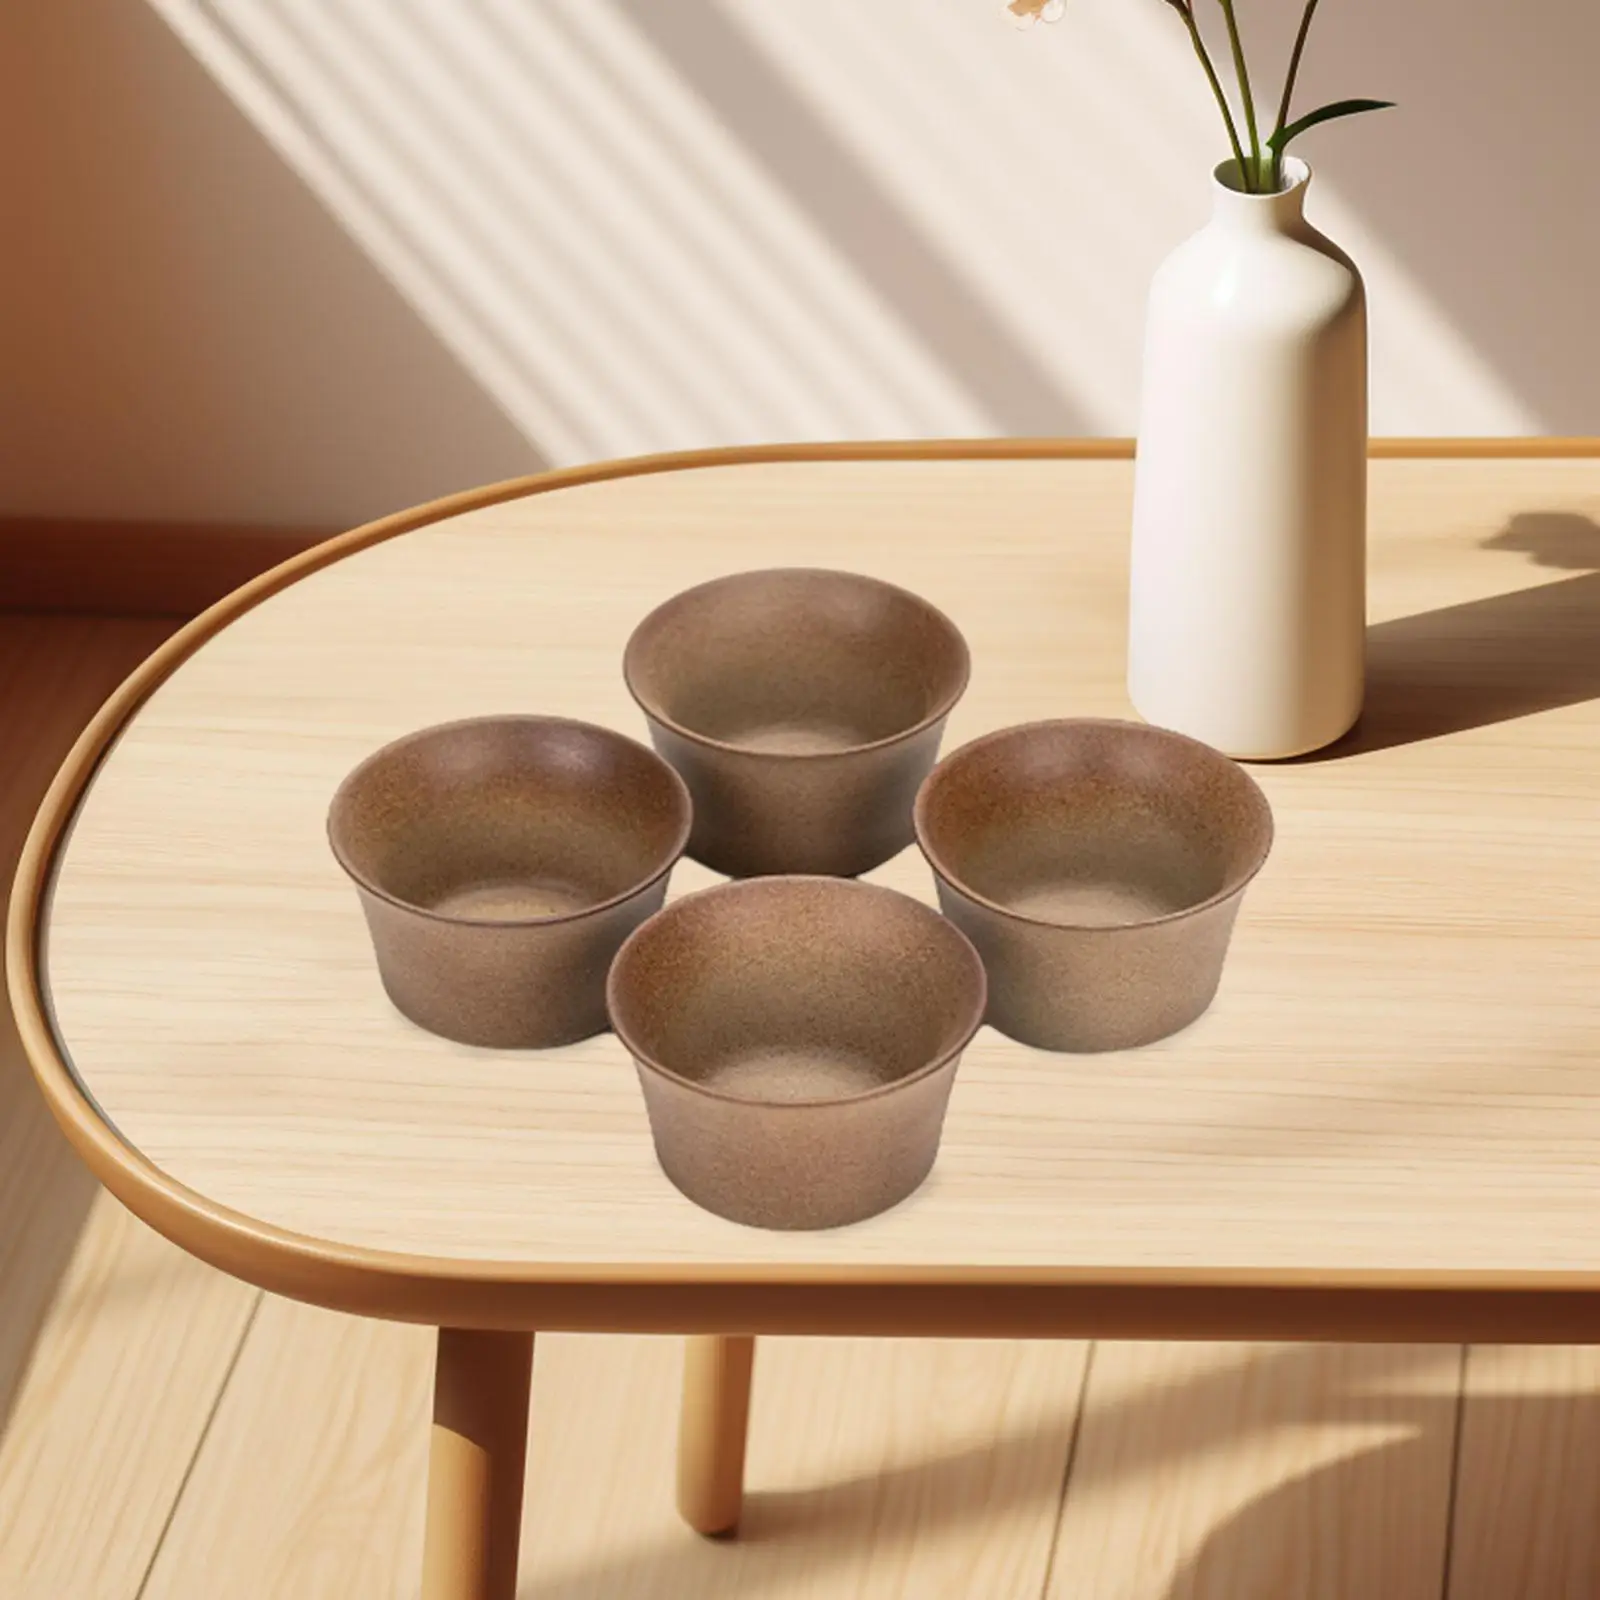 4 Pieces Japanese Tea Cups Set Traditional Tea Mug without Handles Kung Fu Tea Cup for Latte Hotel Cafe Matcha Tea Cappuccino